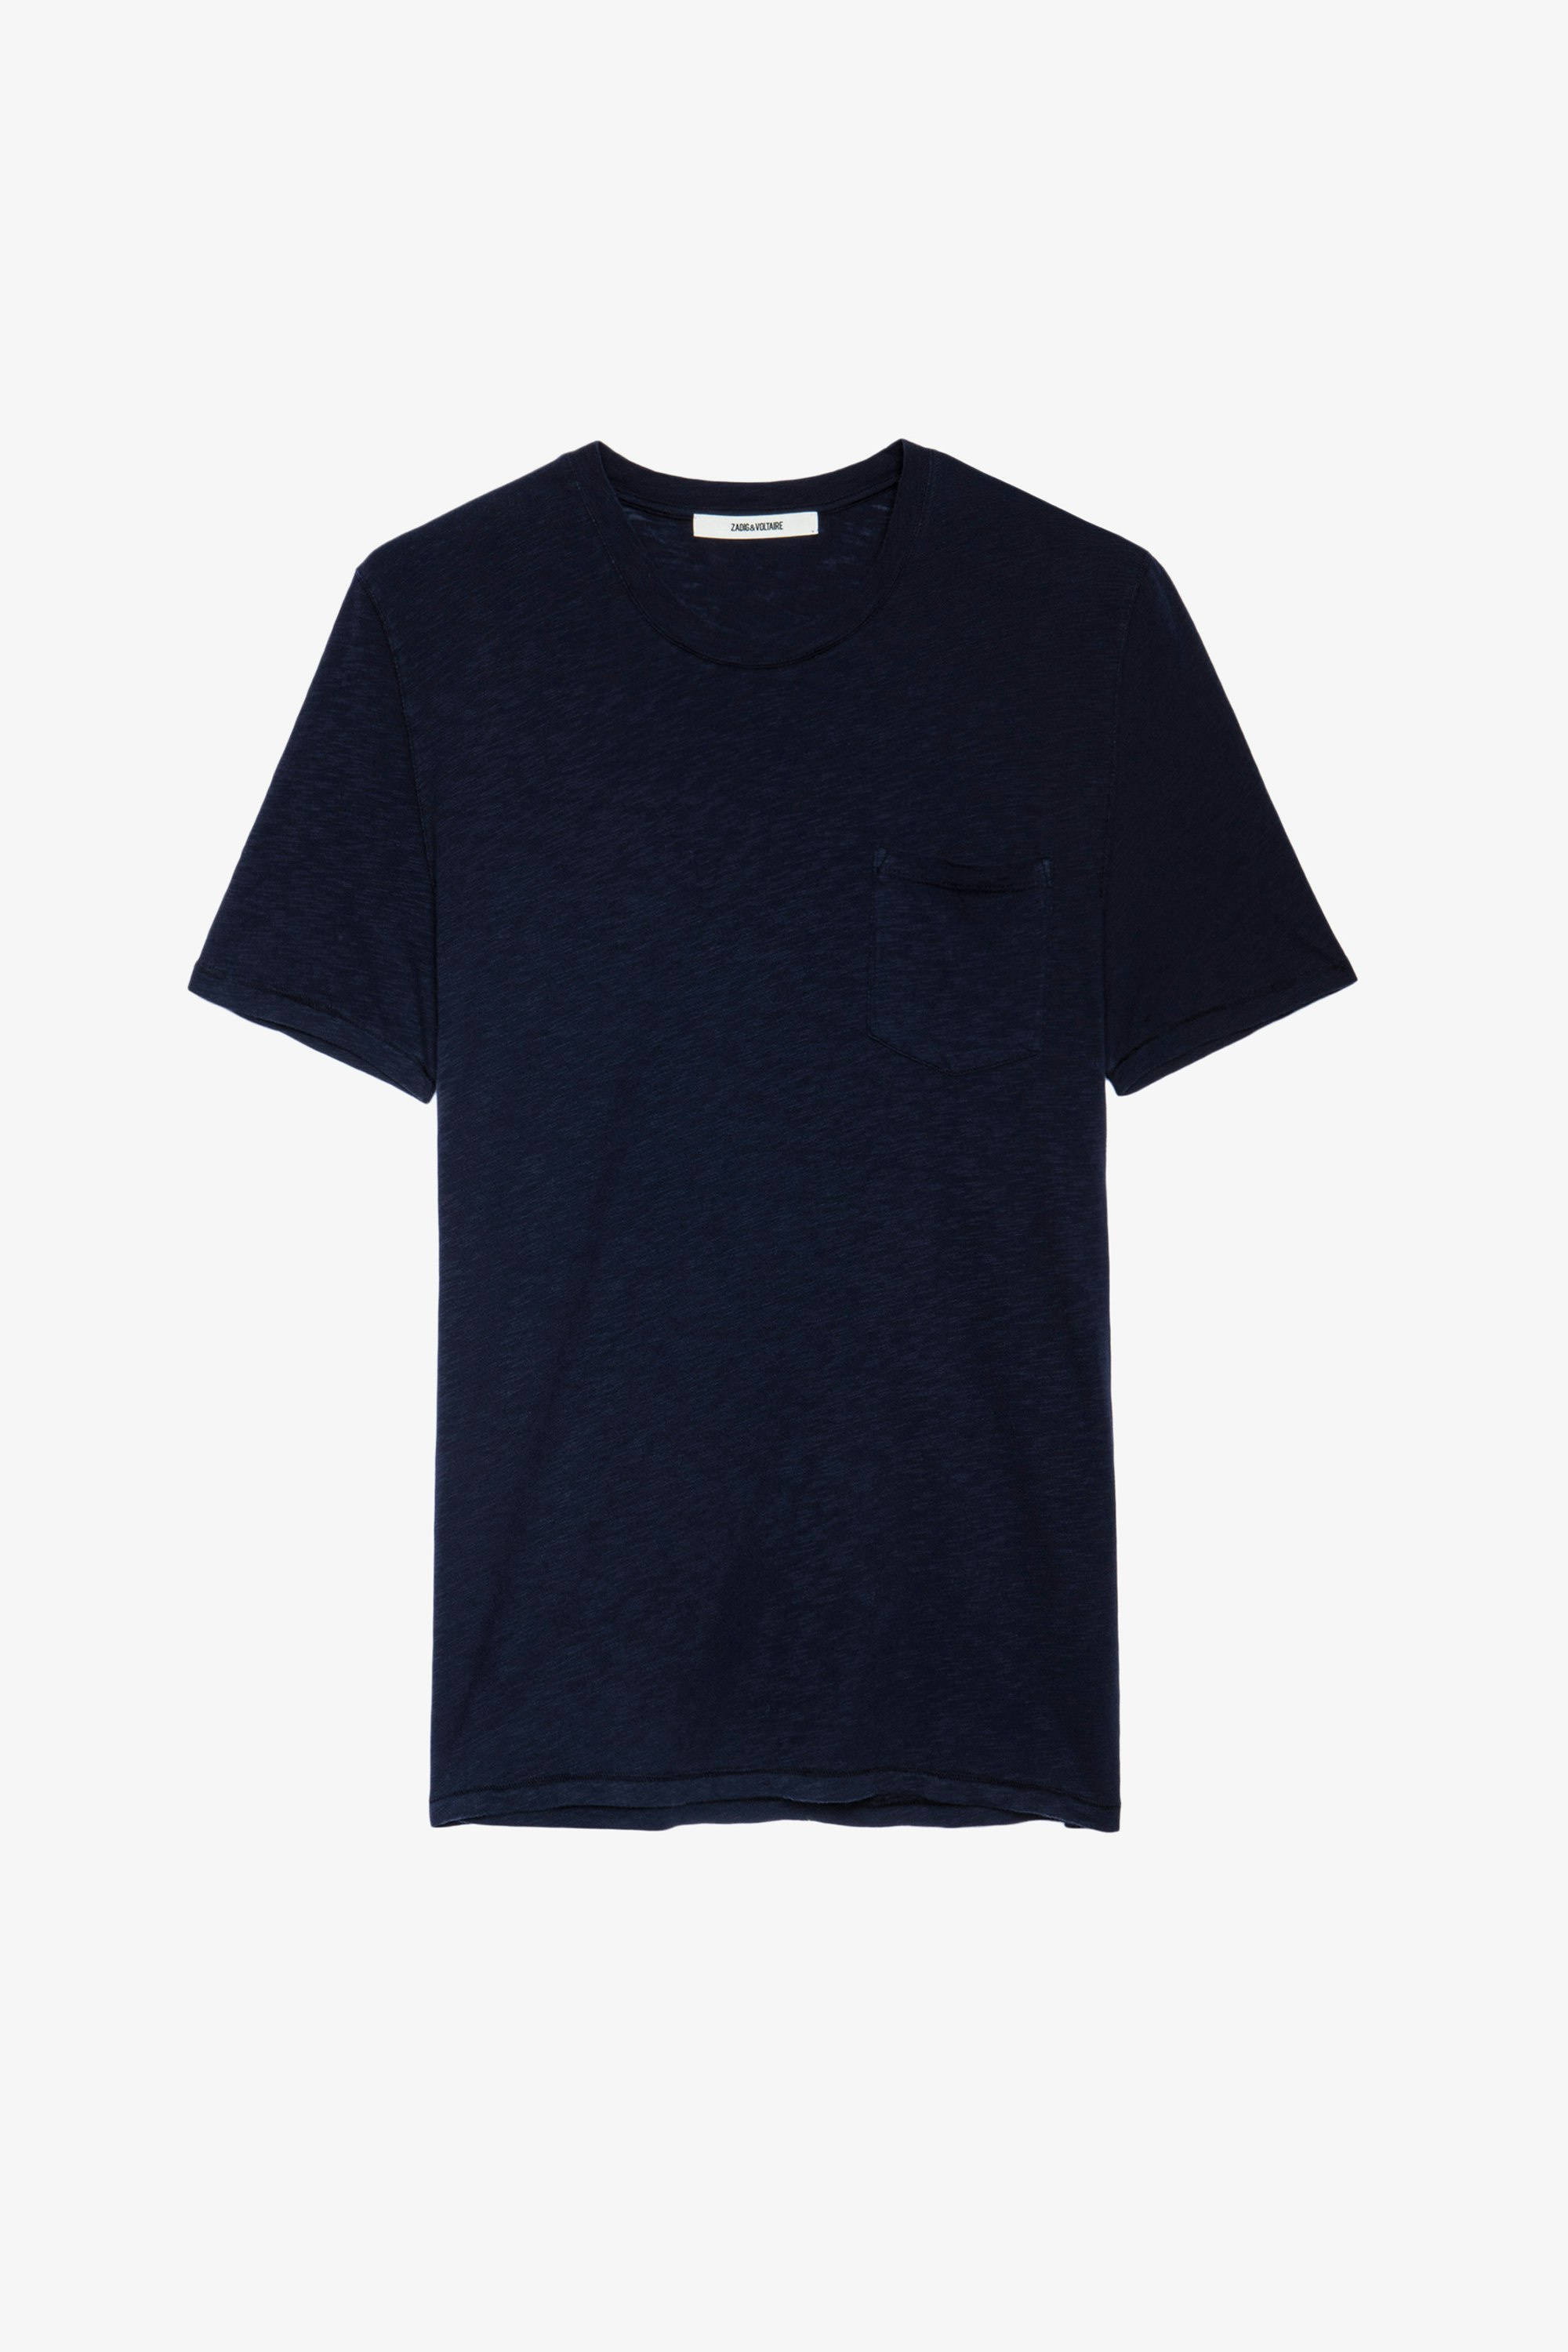 T-Shirt Stockholm Blaues Herren-T-Shirt.